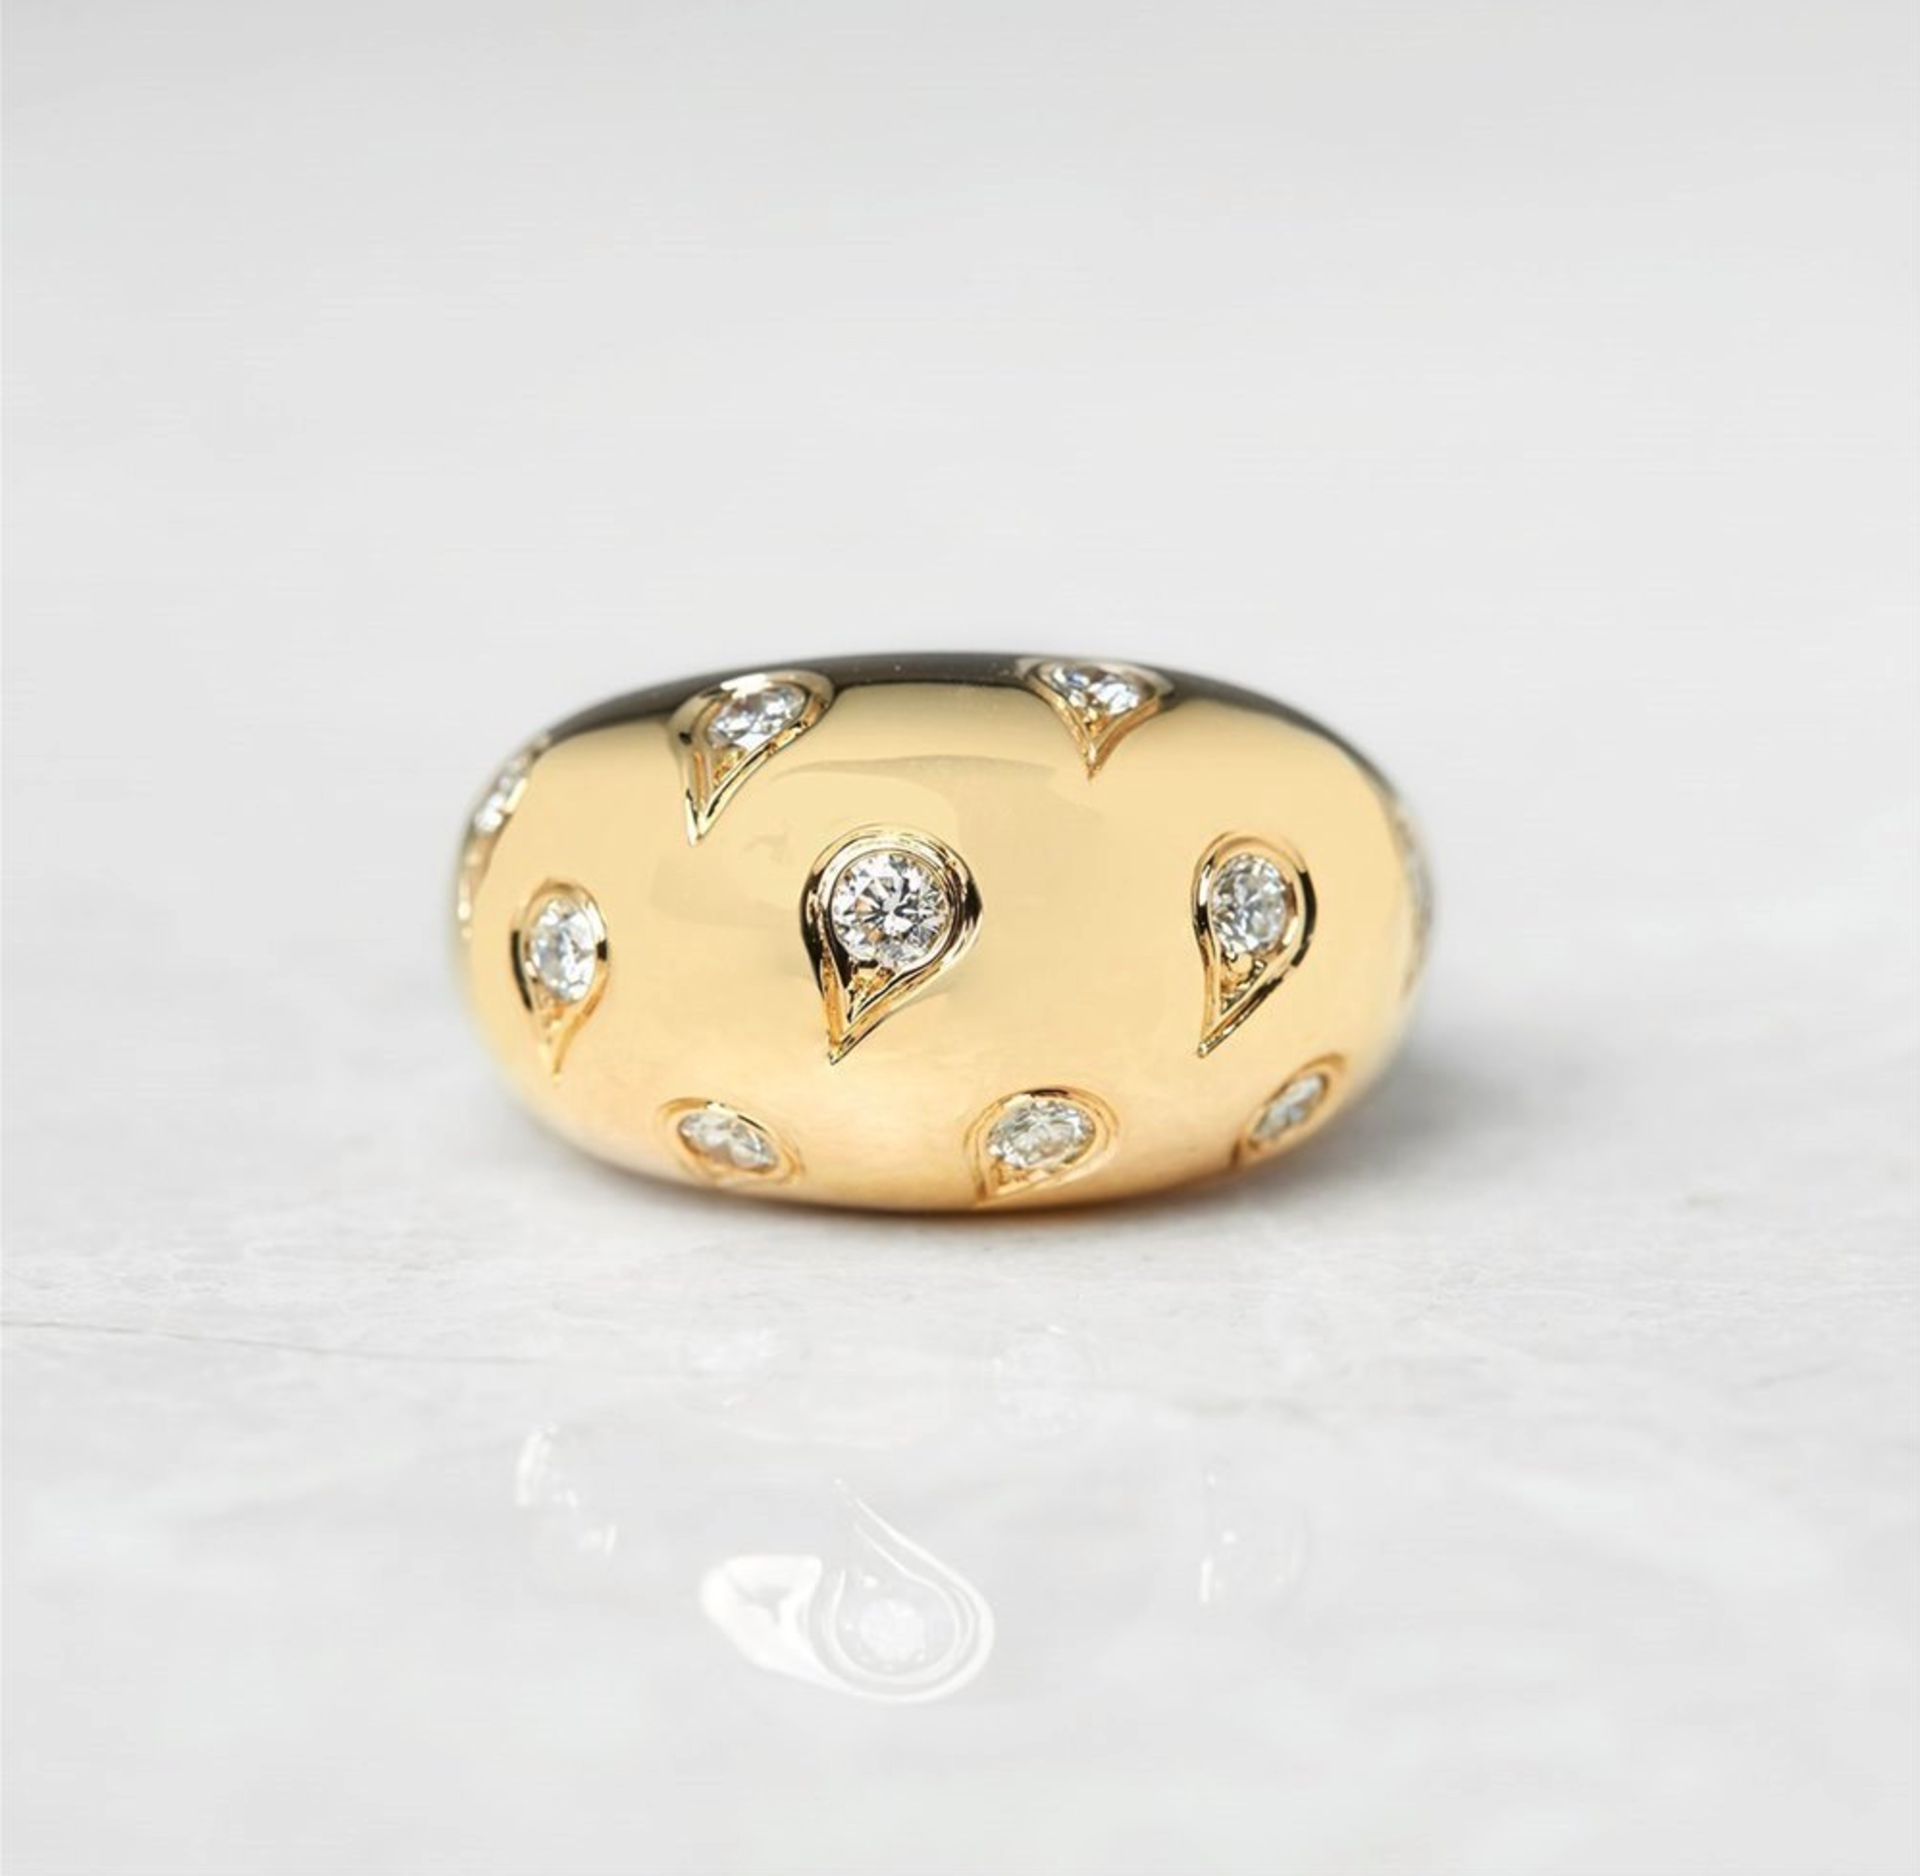 Cartier, 18k Yellow Gold 1.00ct Diamond Bombe Ring - Image 6 of 8